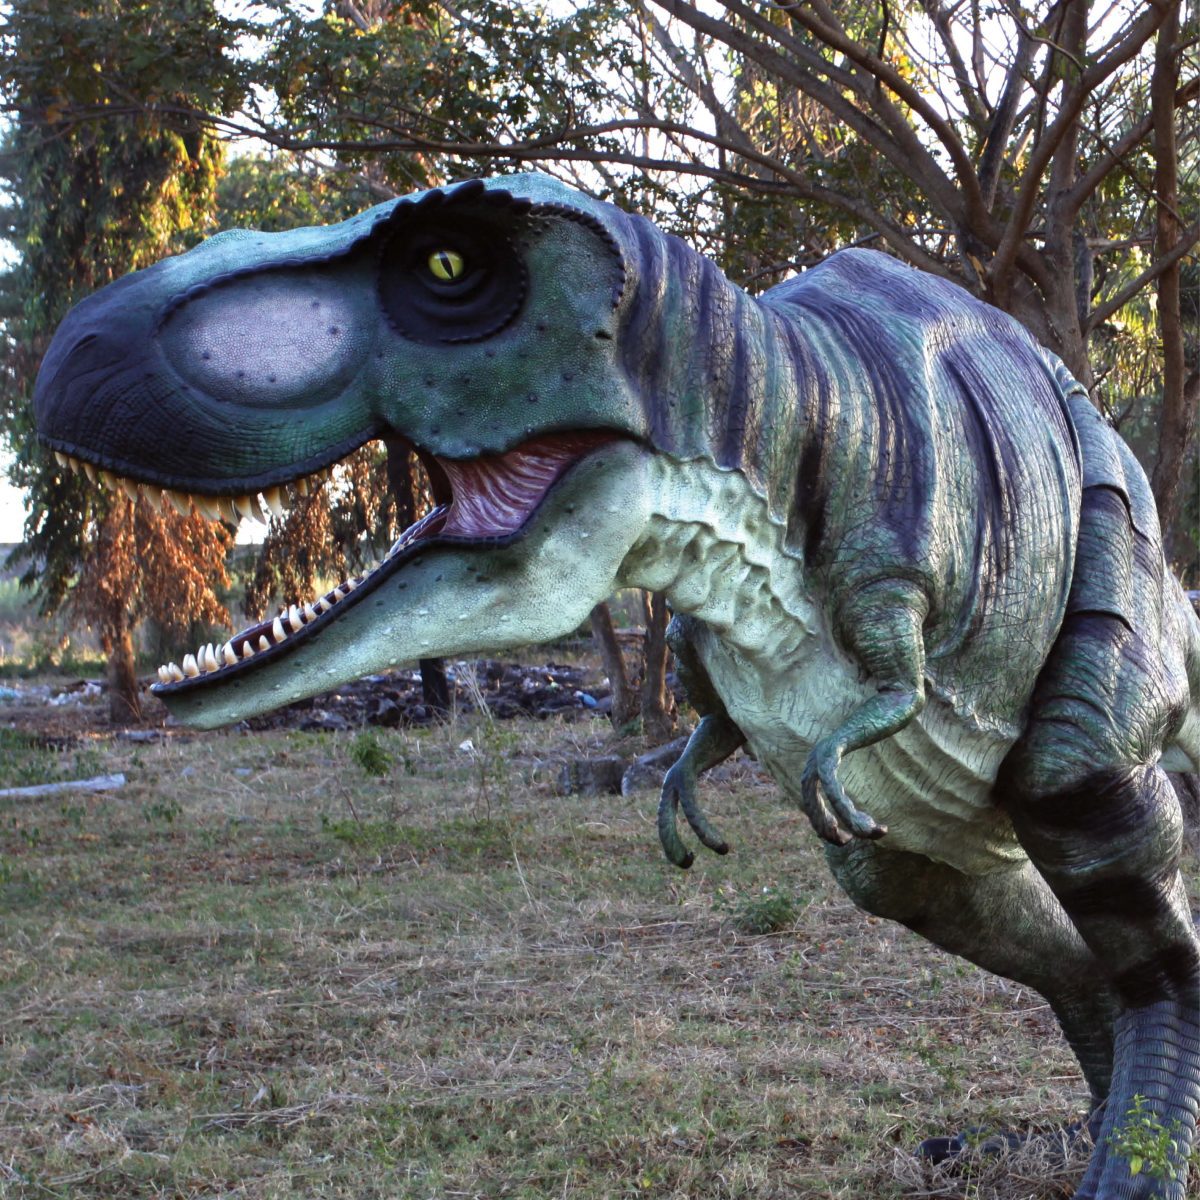 File:T. rex old posture.jpg - Wikipedia